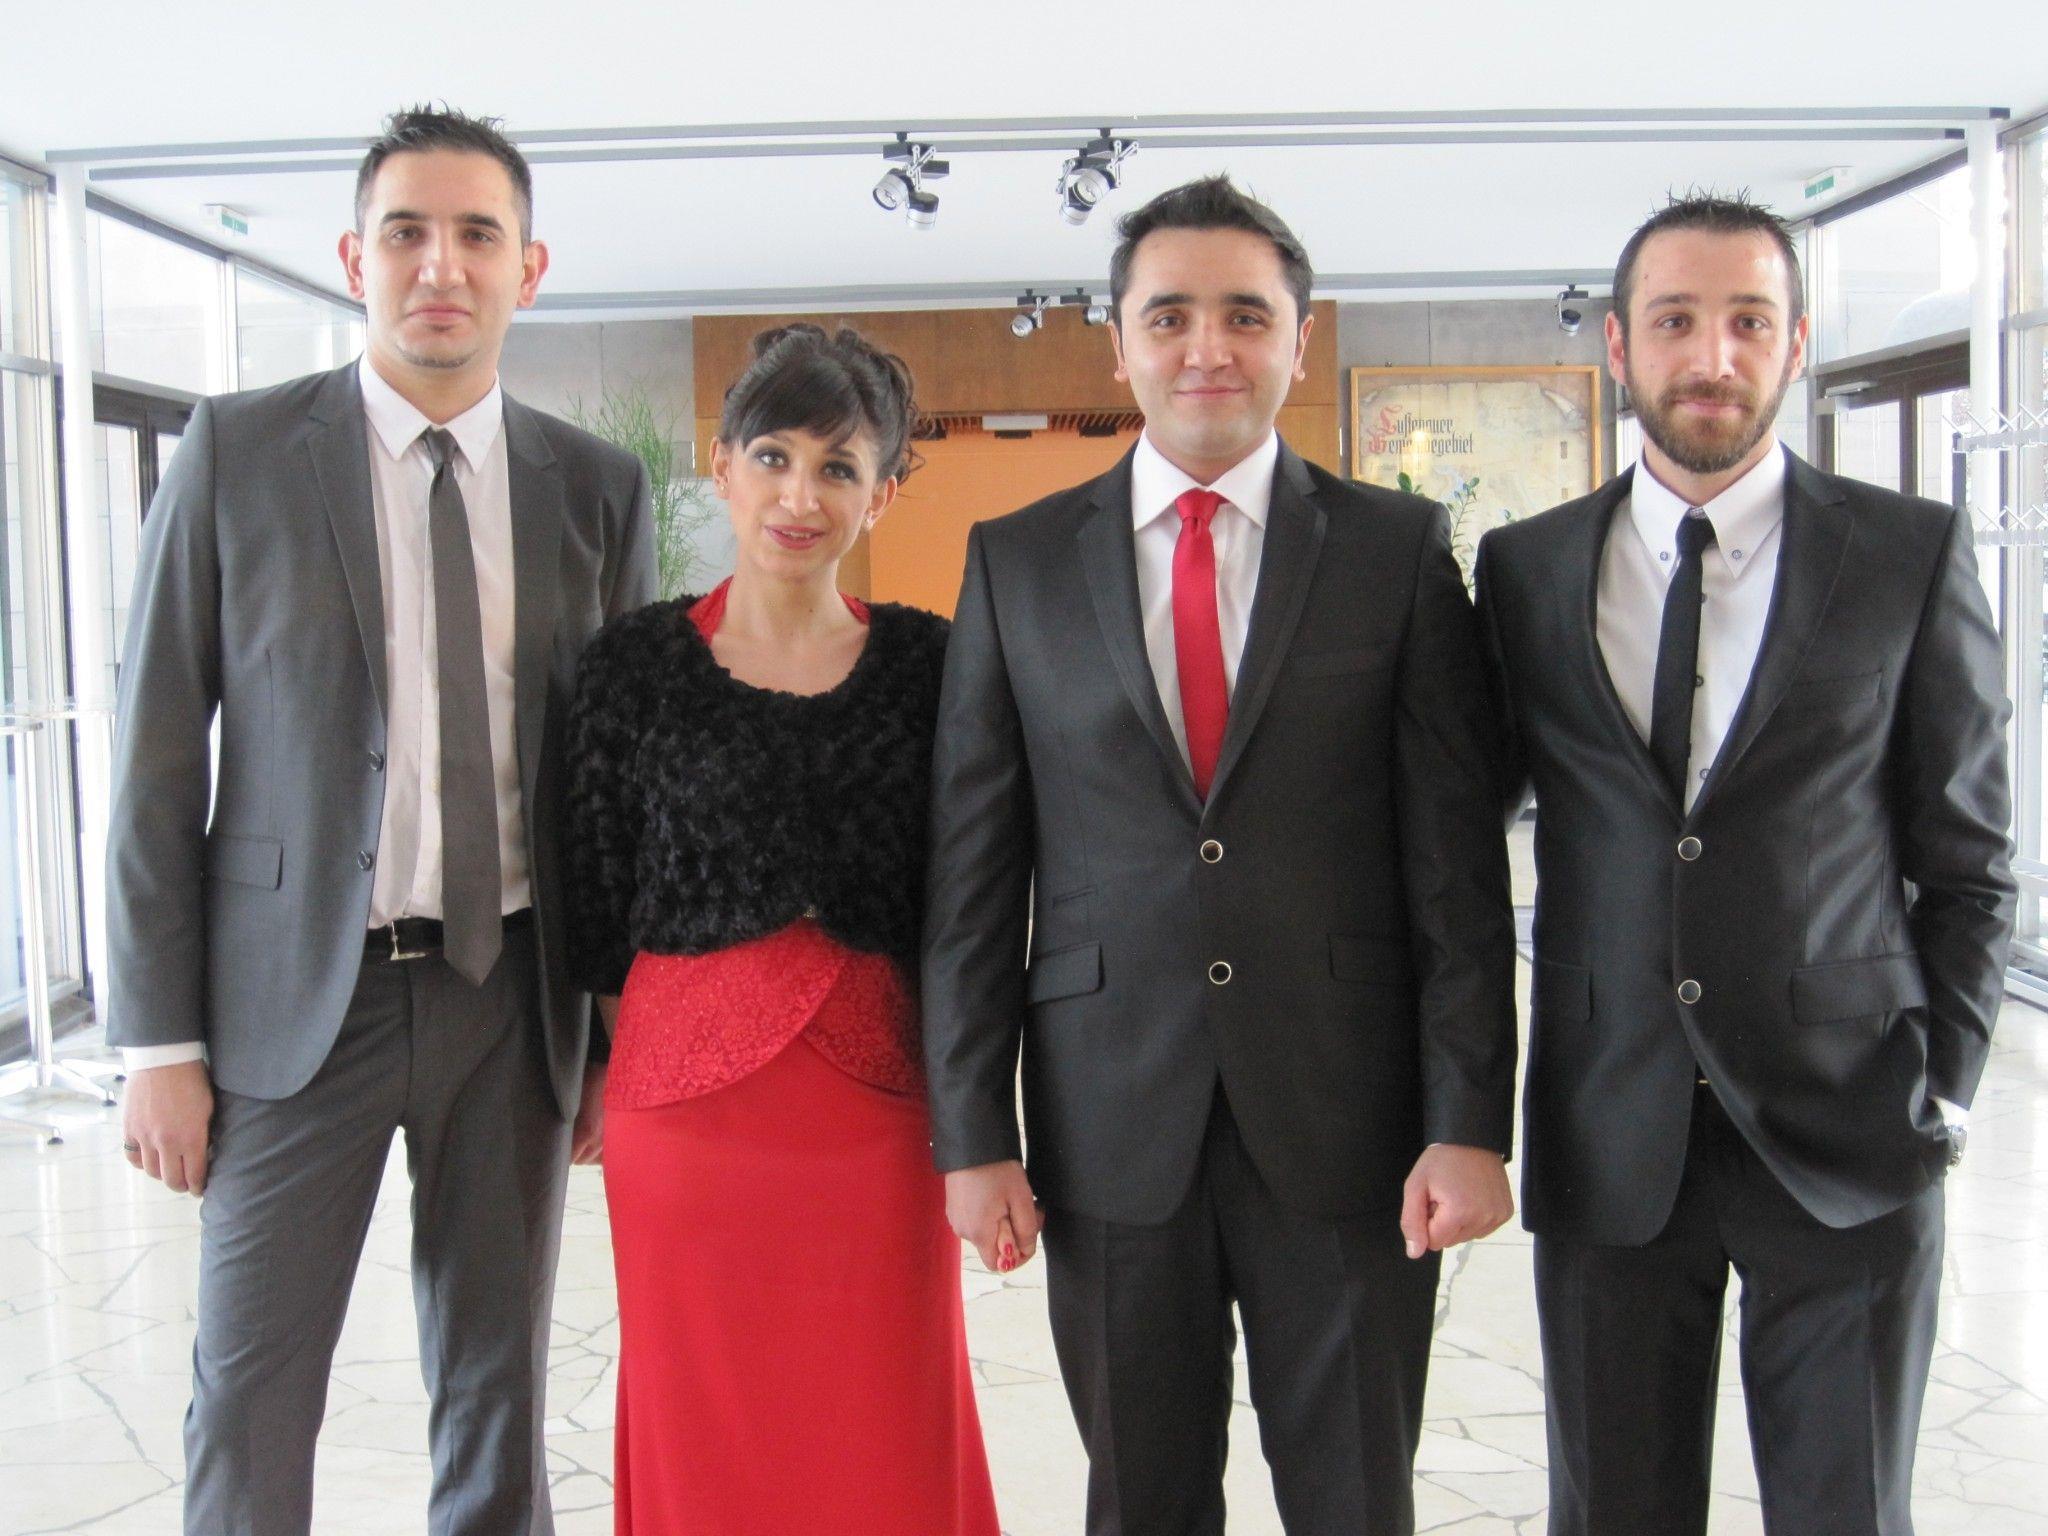 Burcin Salkan und Mustafa Ulus haben geheiratet